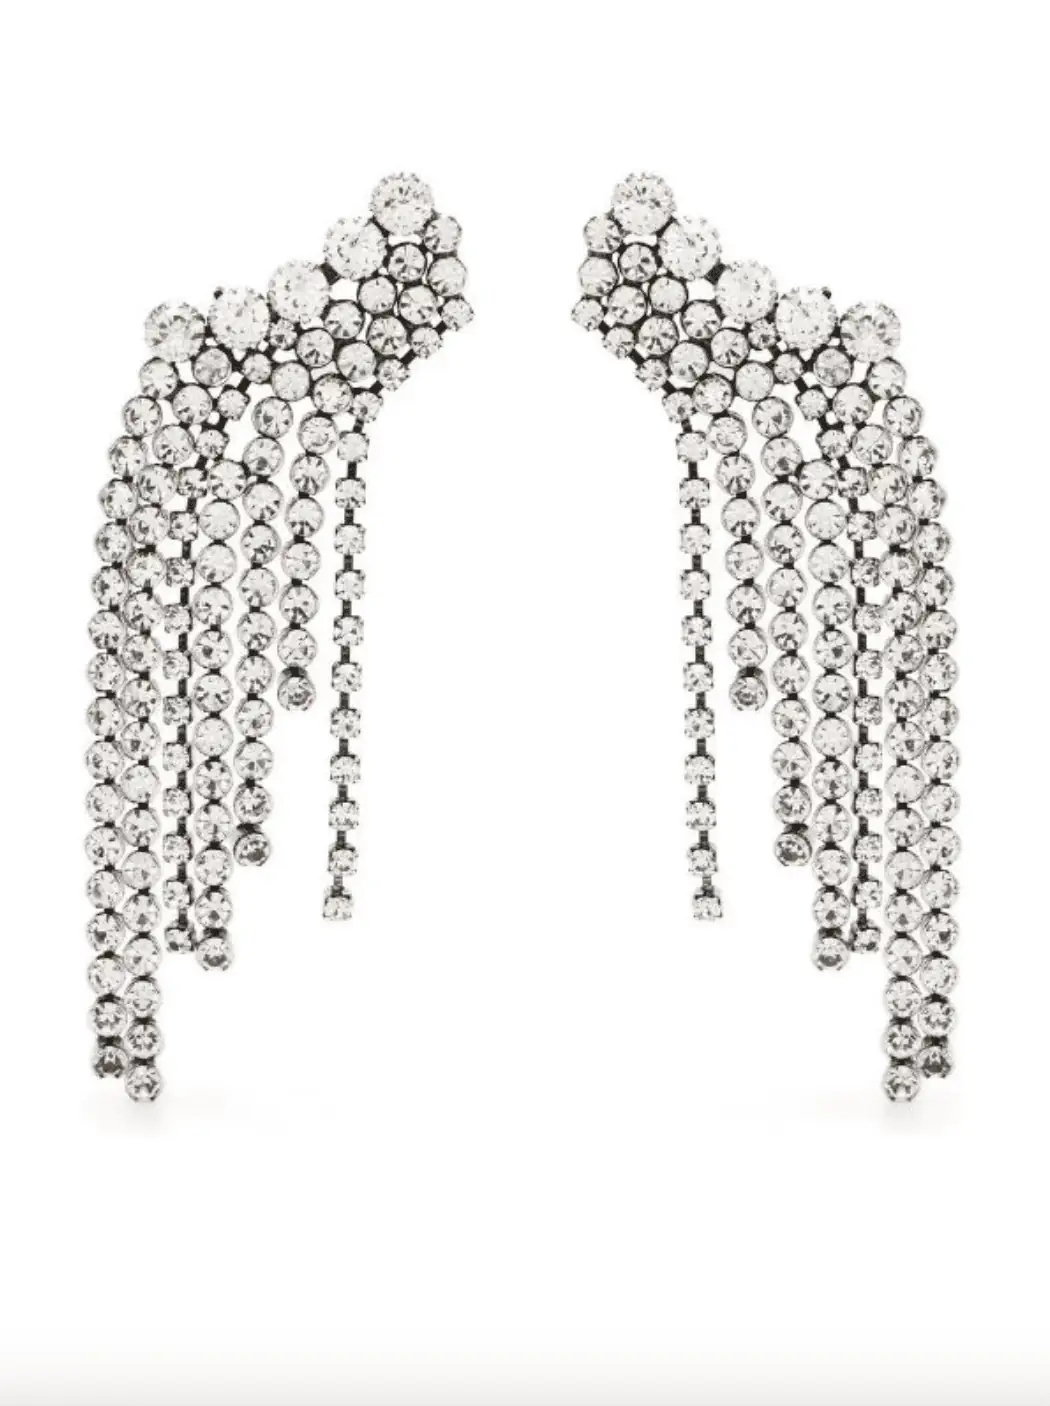 Jessel Taank's Crystal Fringe Earrings Real Housewives of New York Season 14 Episode 2 Fashion Isabel Marant Crystal Fringe Earrings